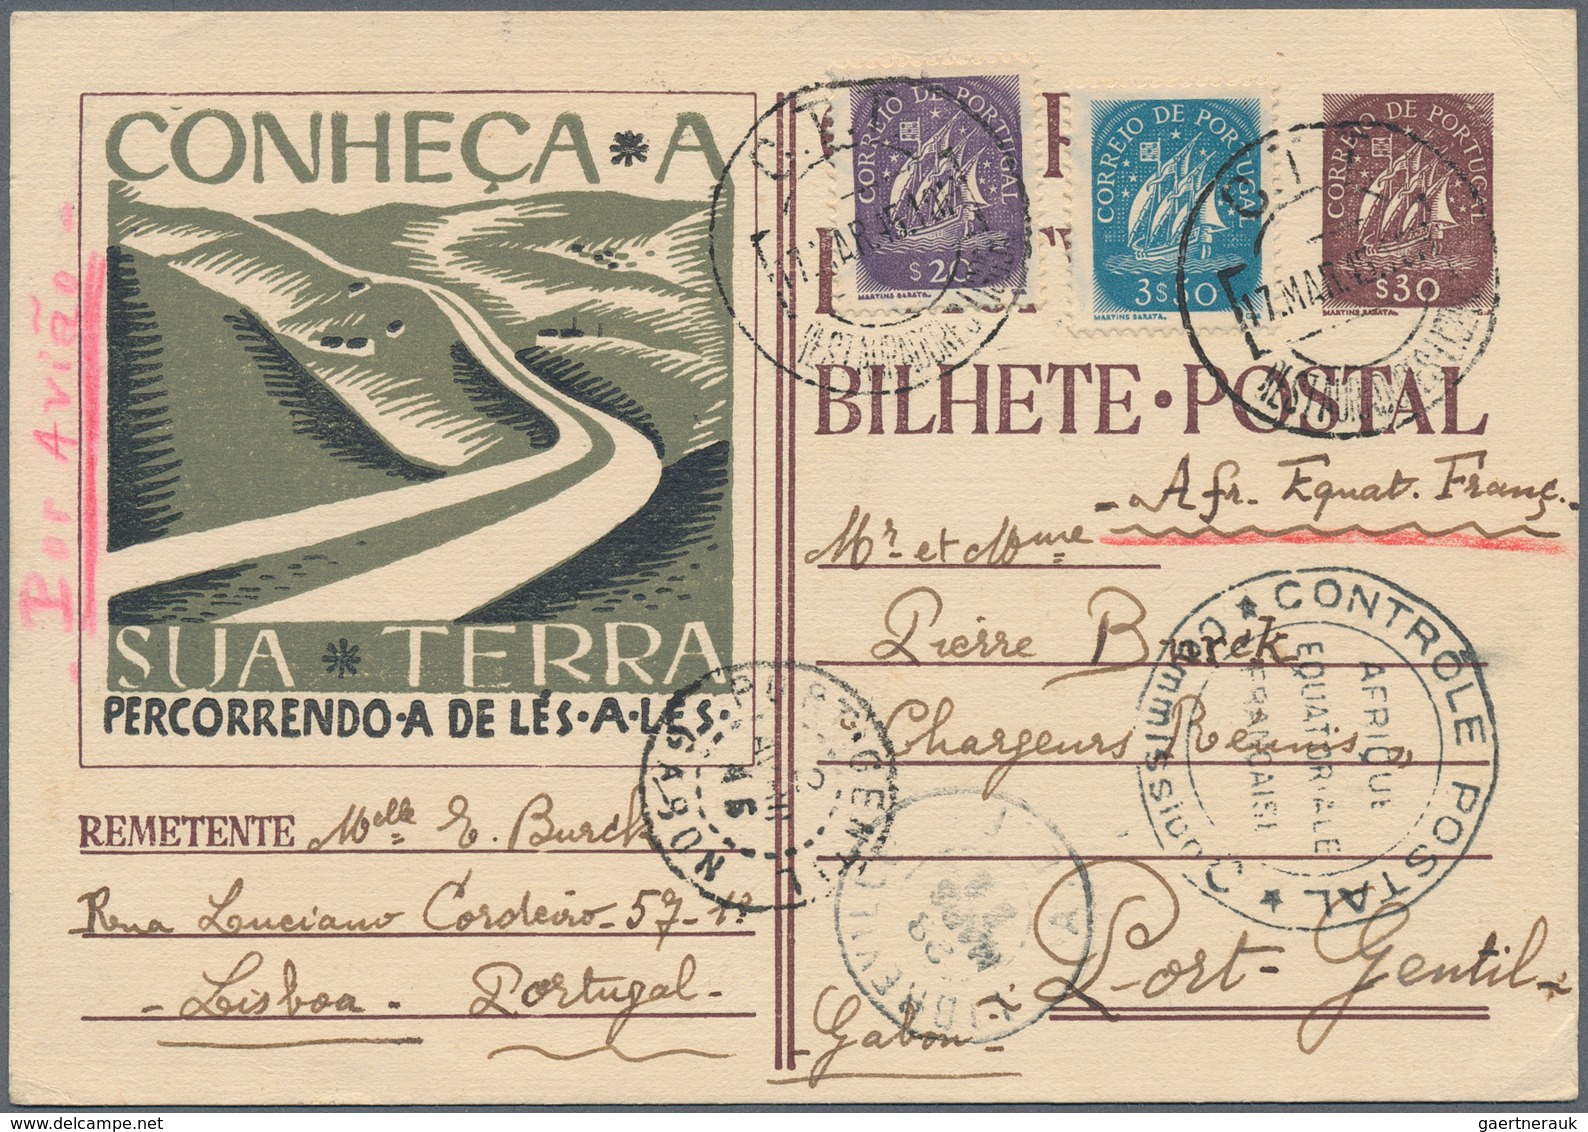 27739 Portugal: 1820/1946: 21 envelopes and postal stationeries including pre-philatelic, registered and u